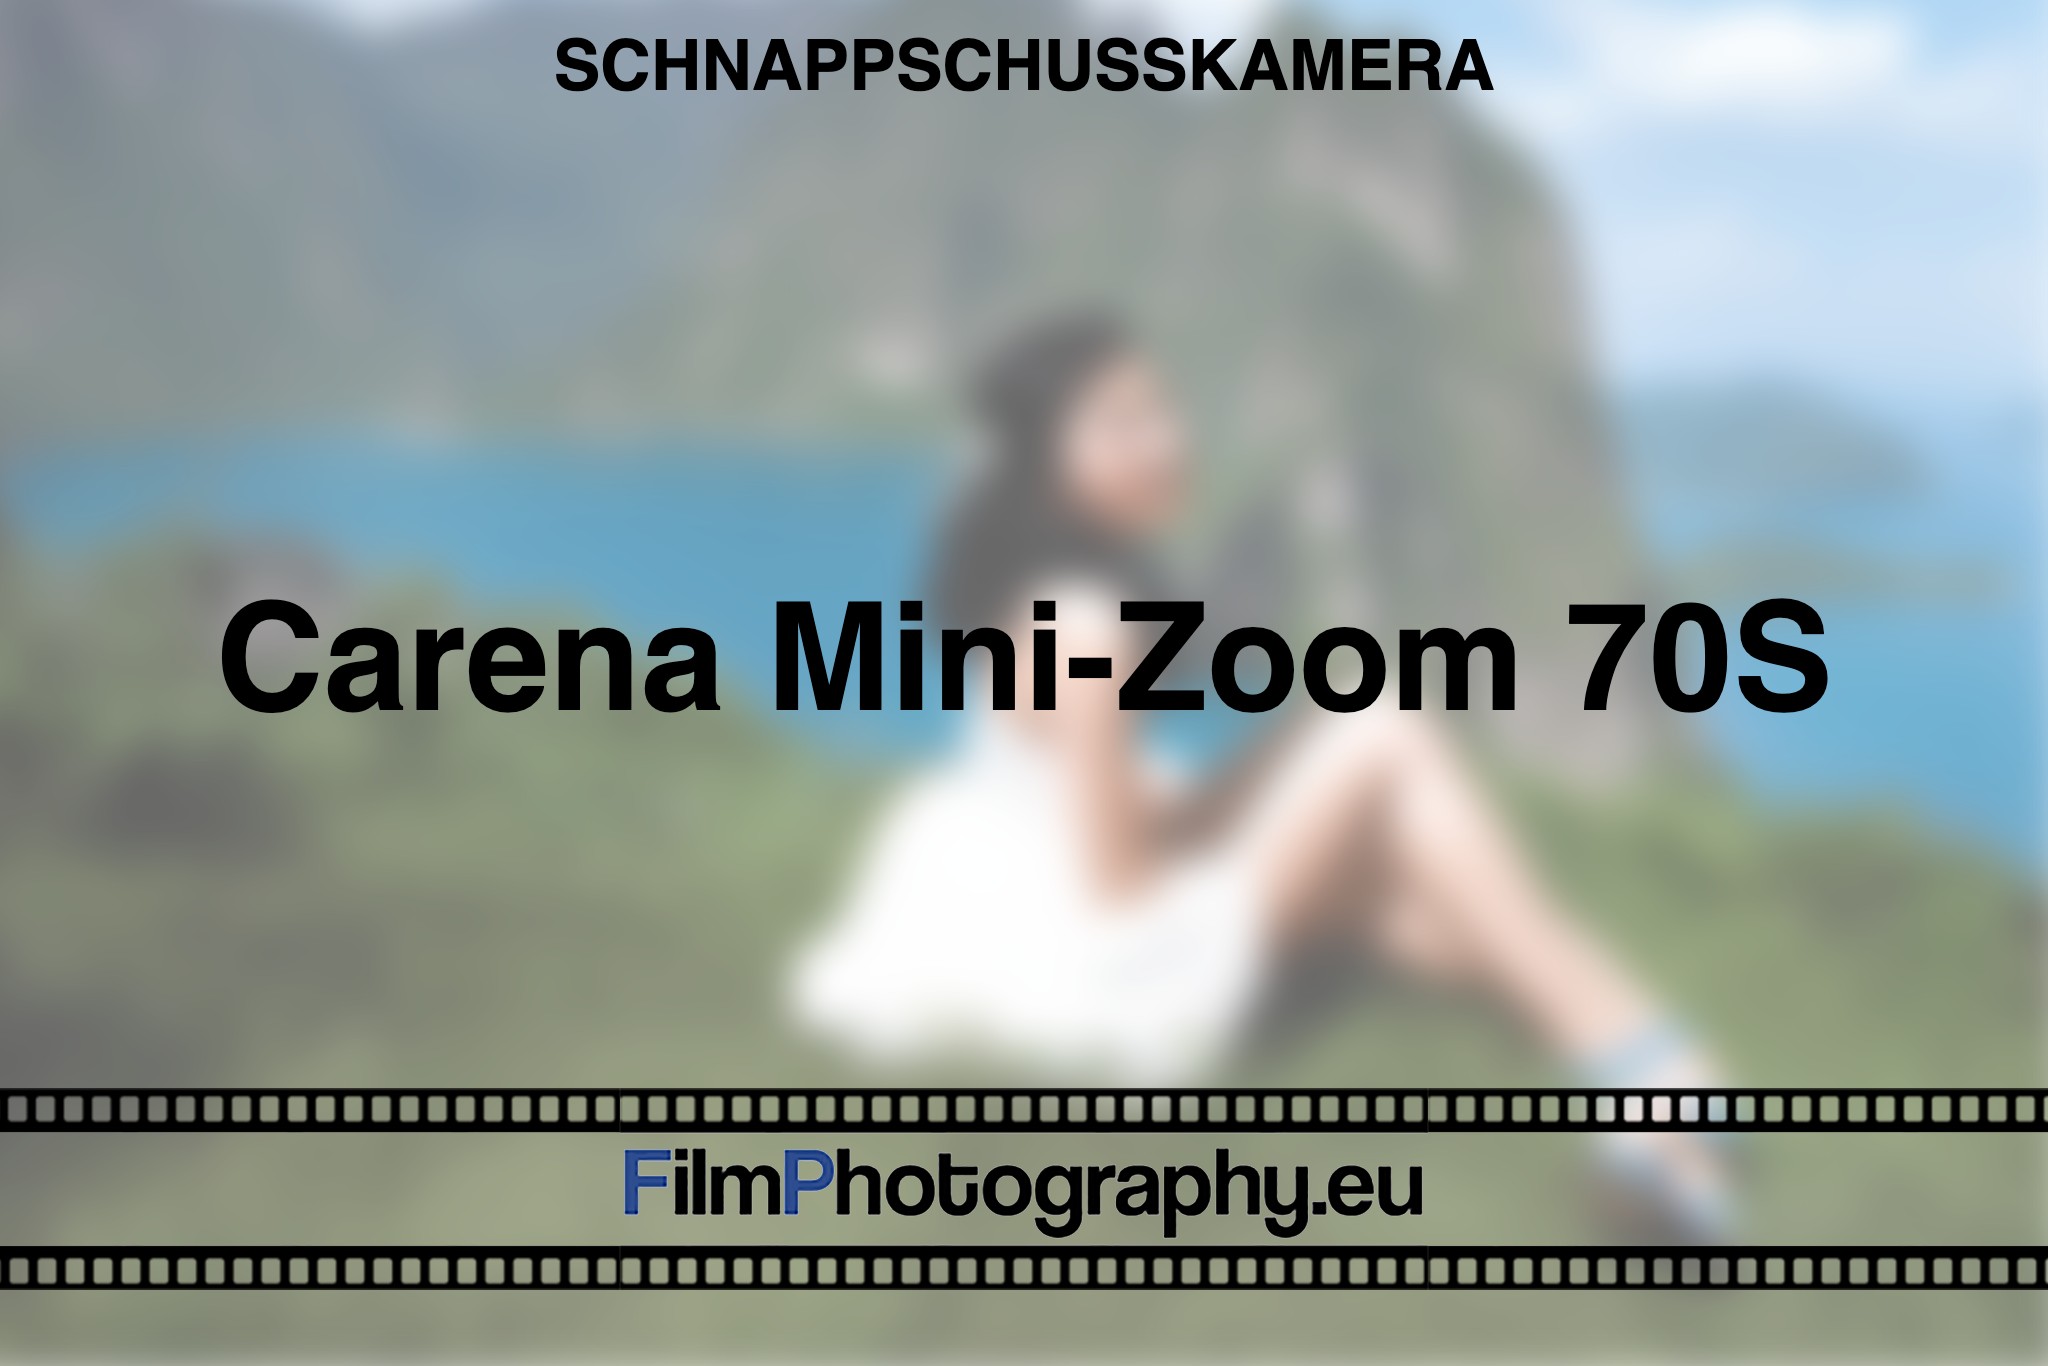 carena-mini-zoom-70s-schnappschusskamera-bnv